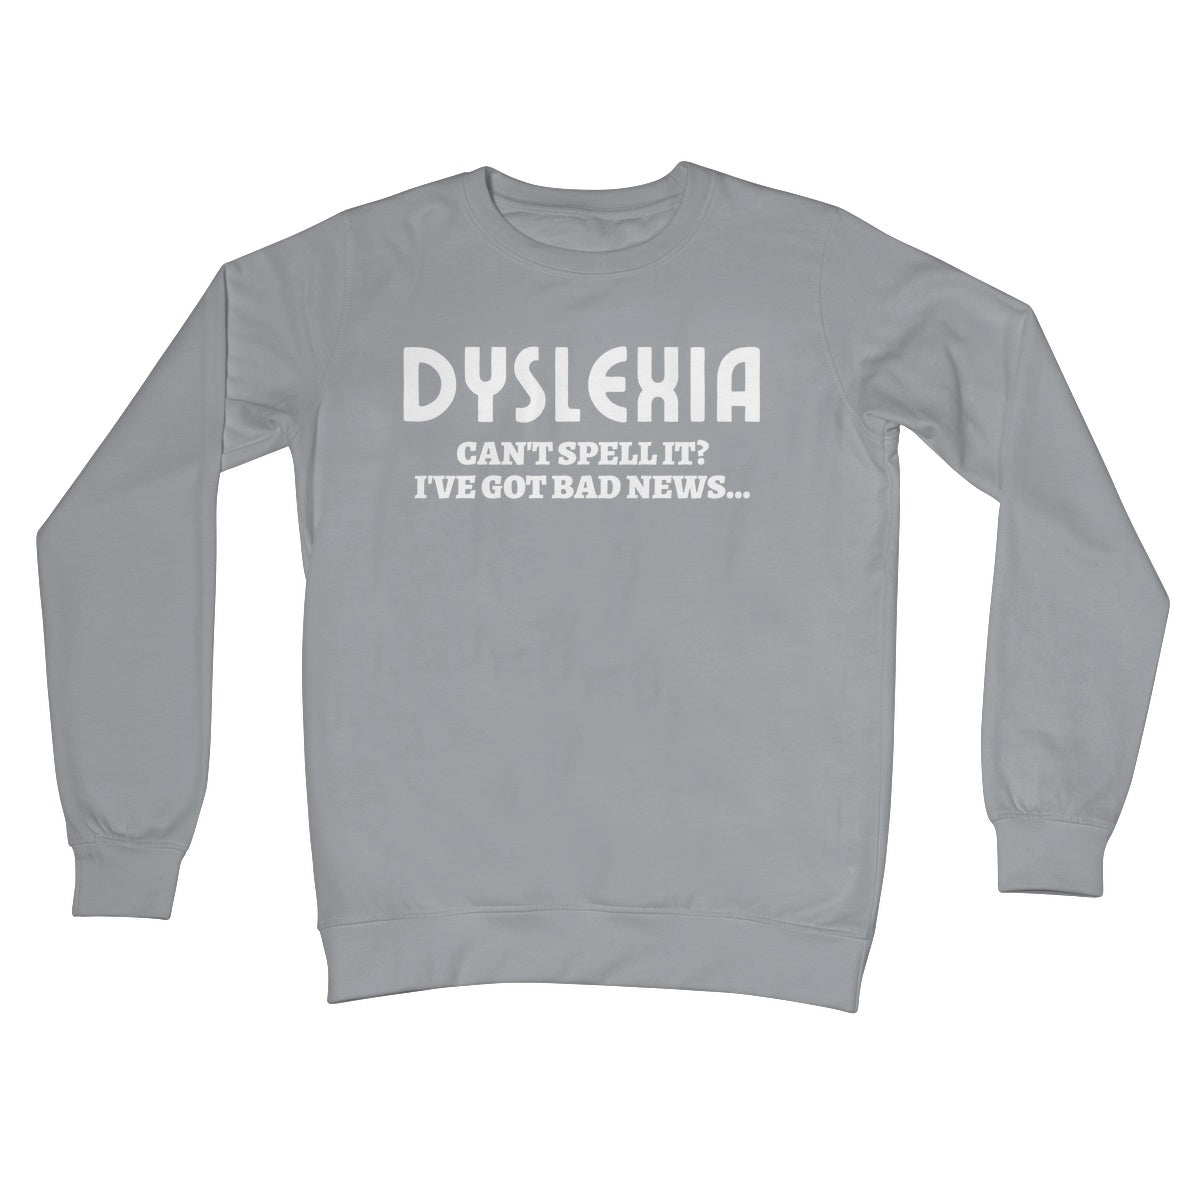 dyslexia jumper grey